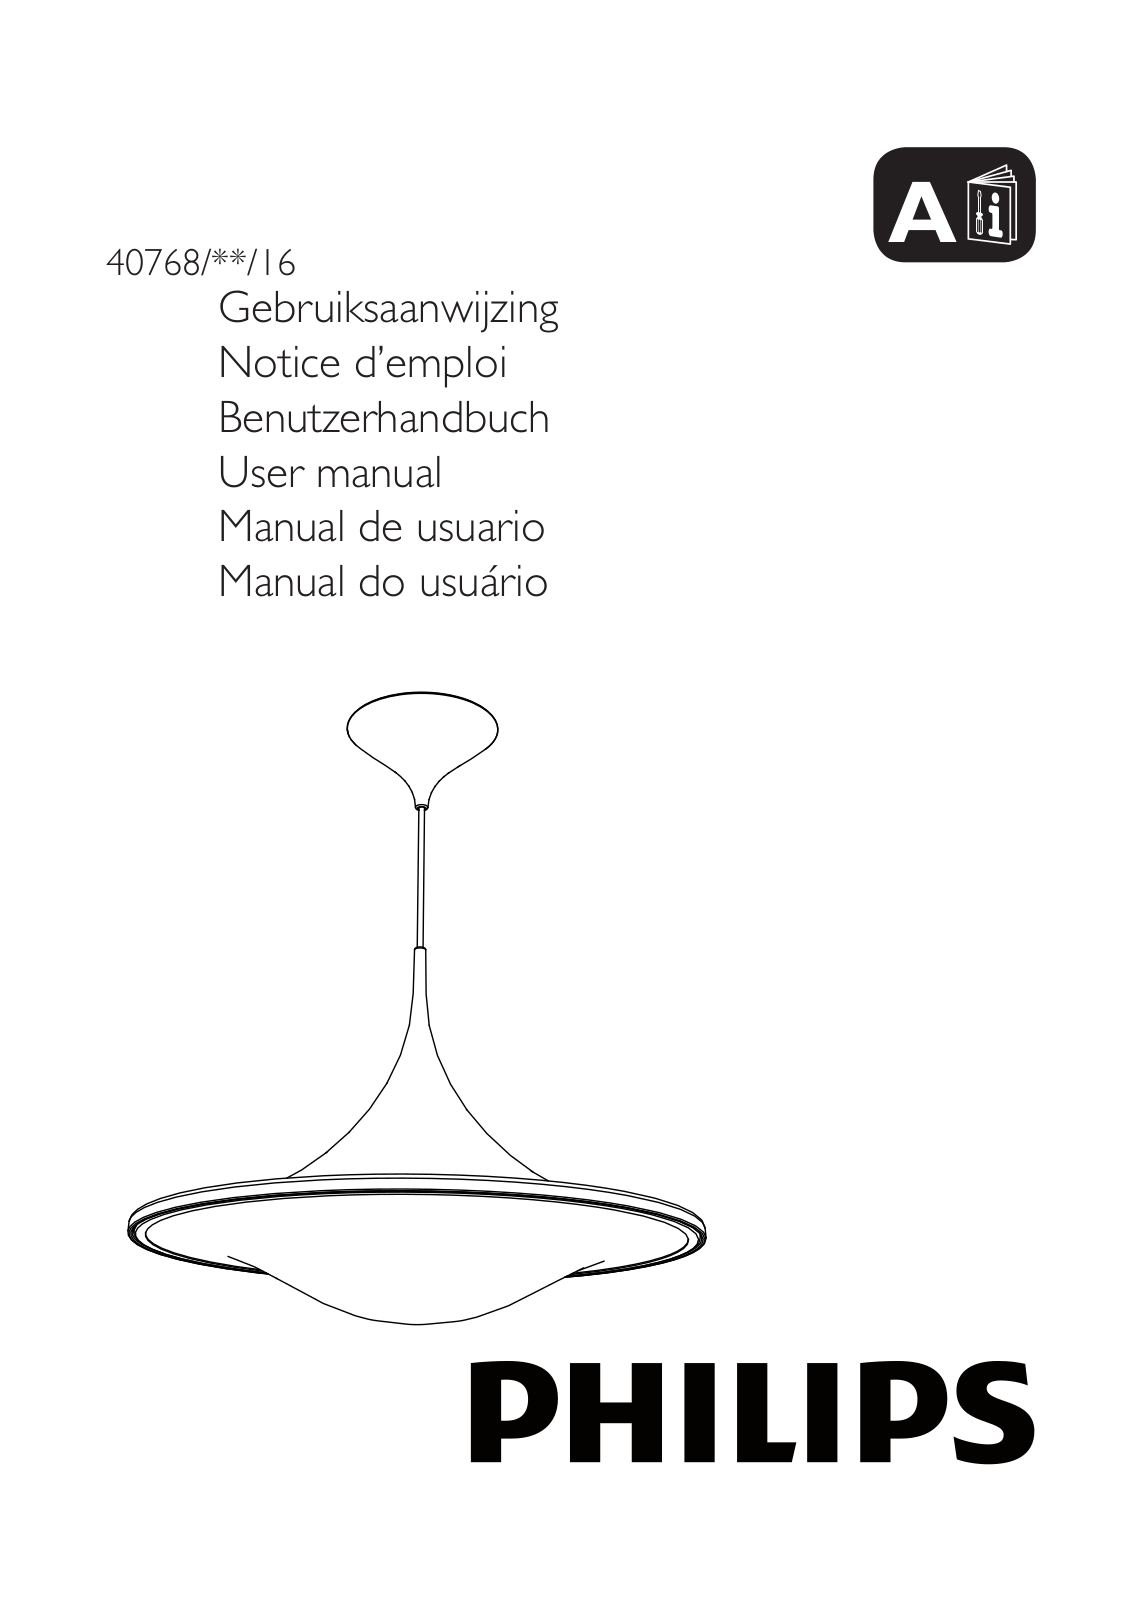 Philips 40768-31-16 User Manual